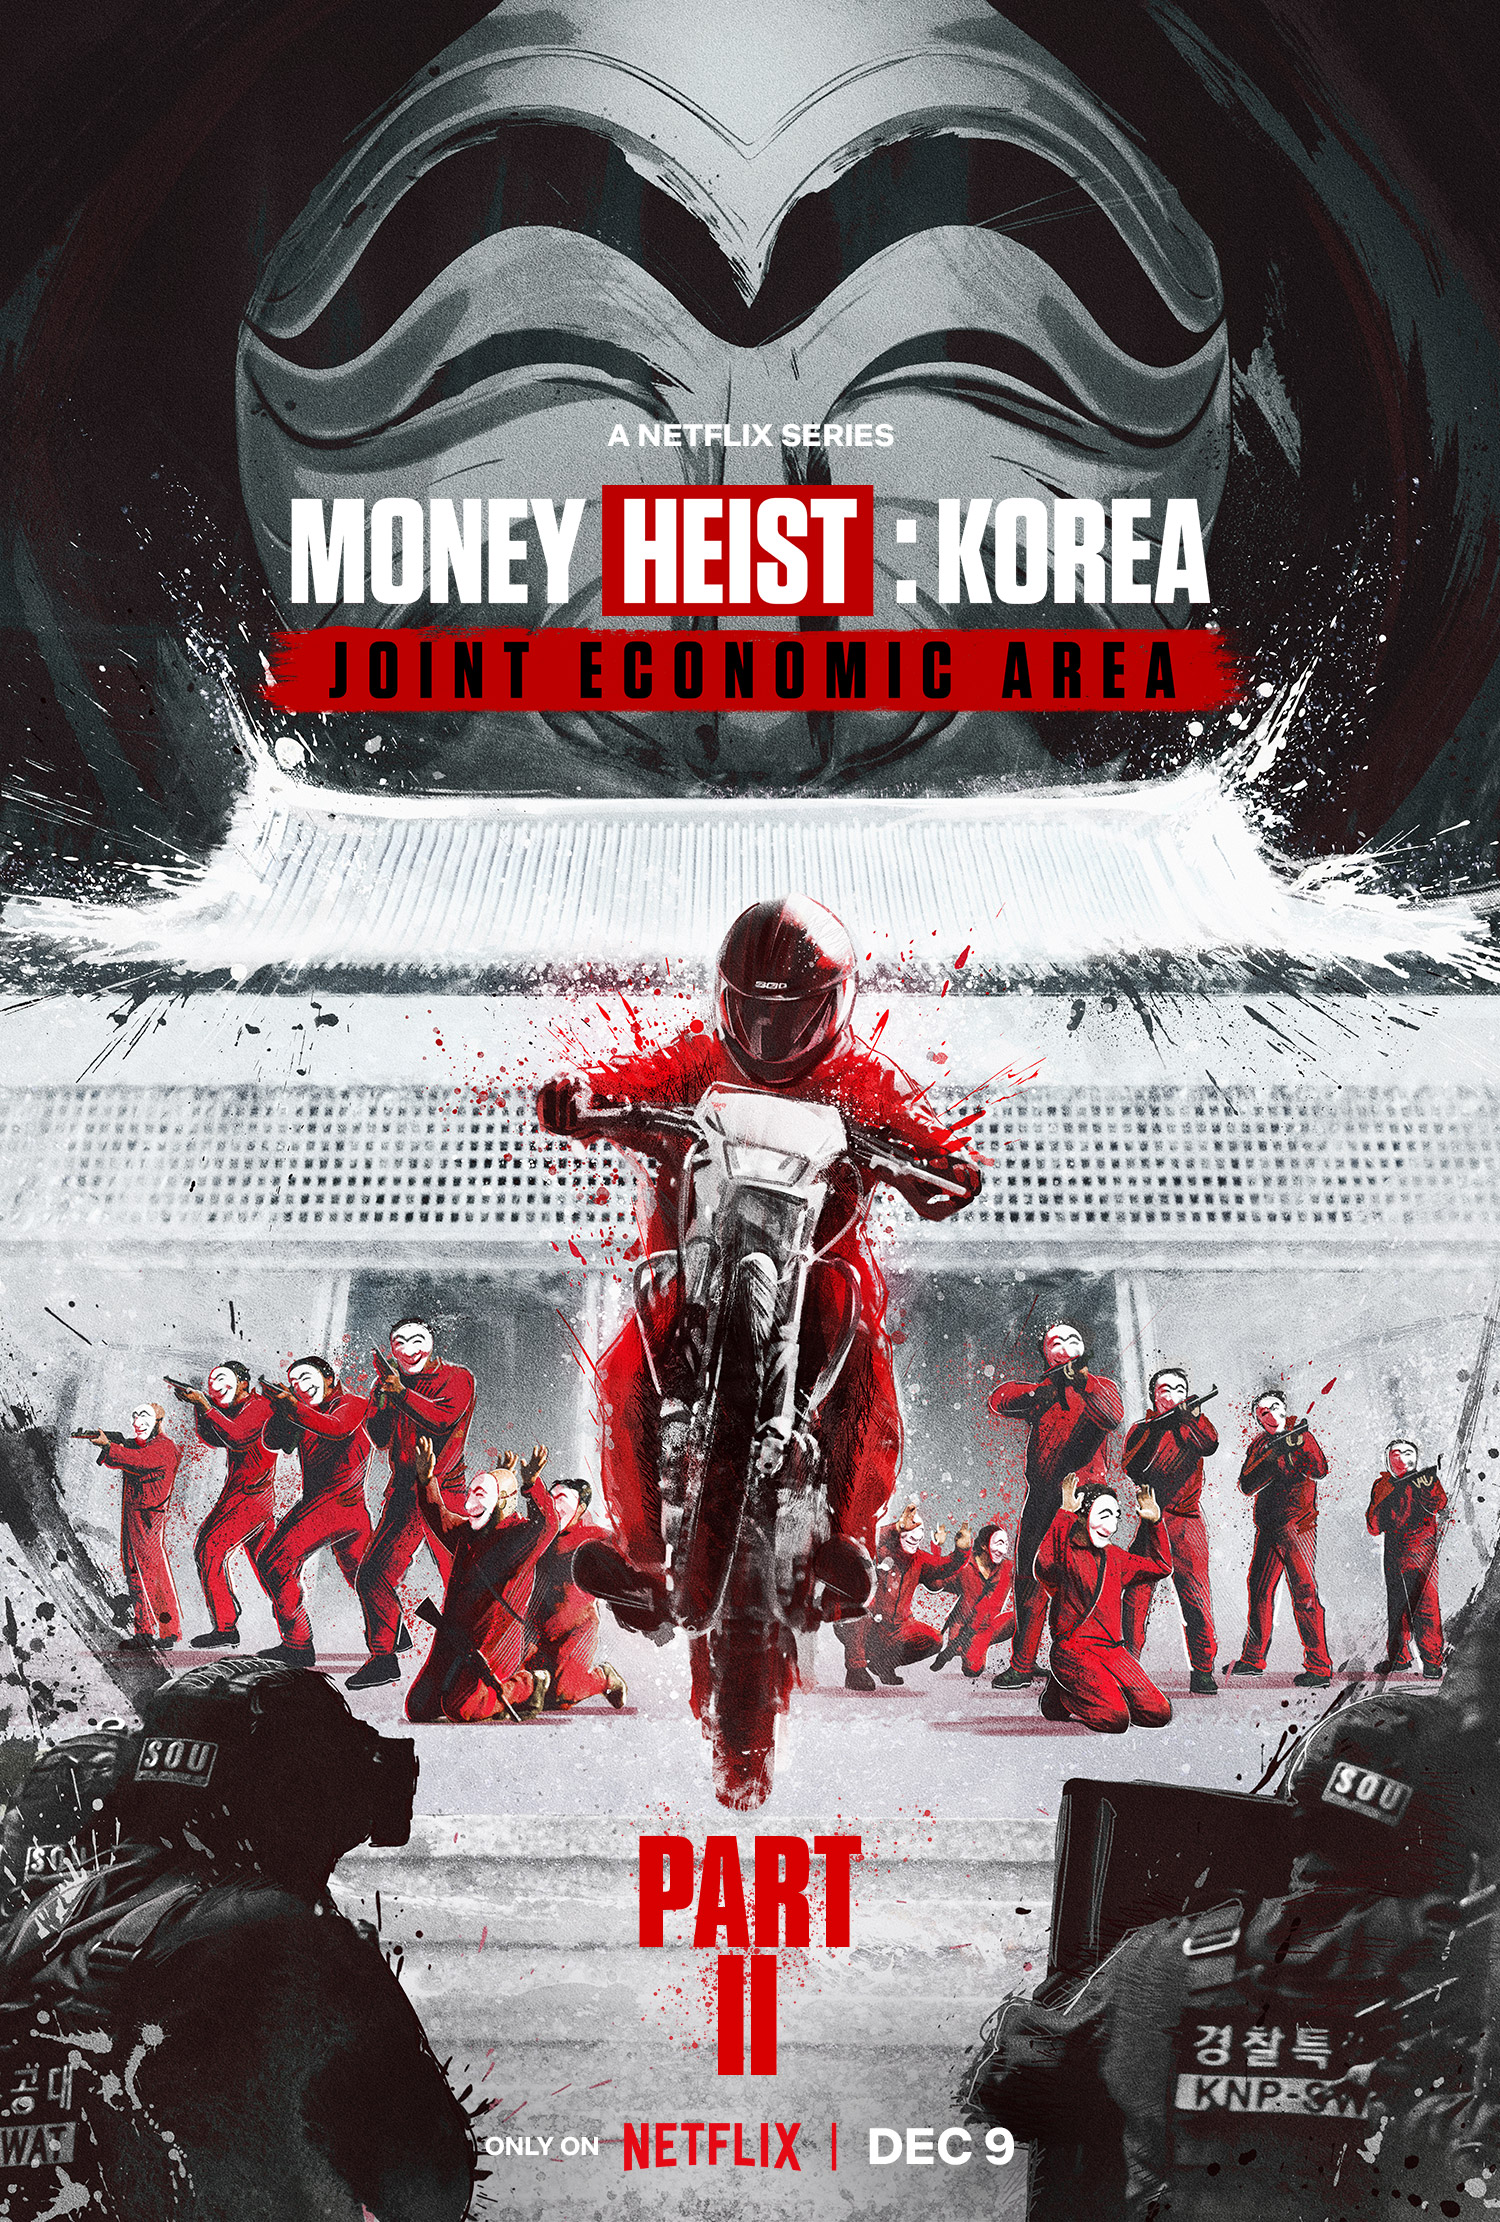 Money Heist: Korea – Joint Economic Area is back for Part II!